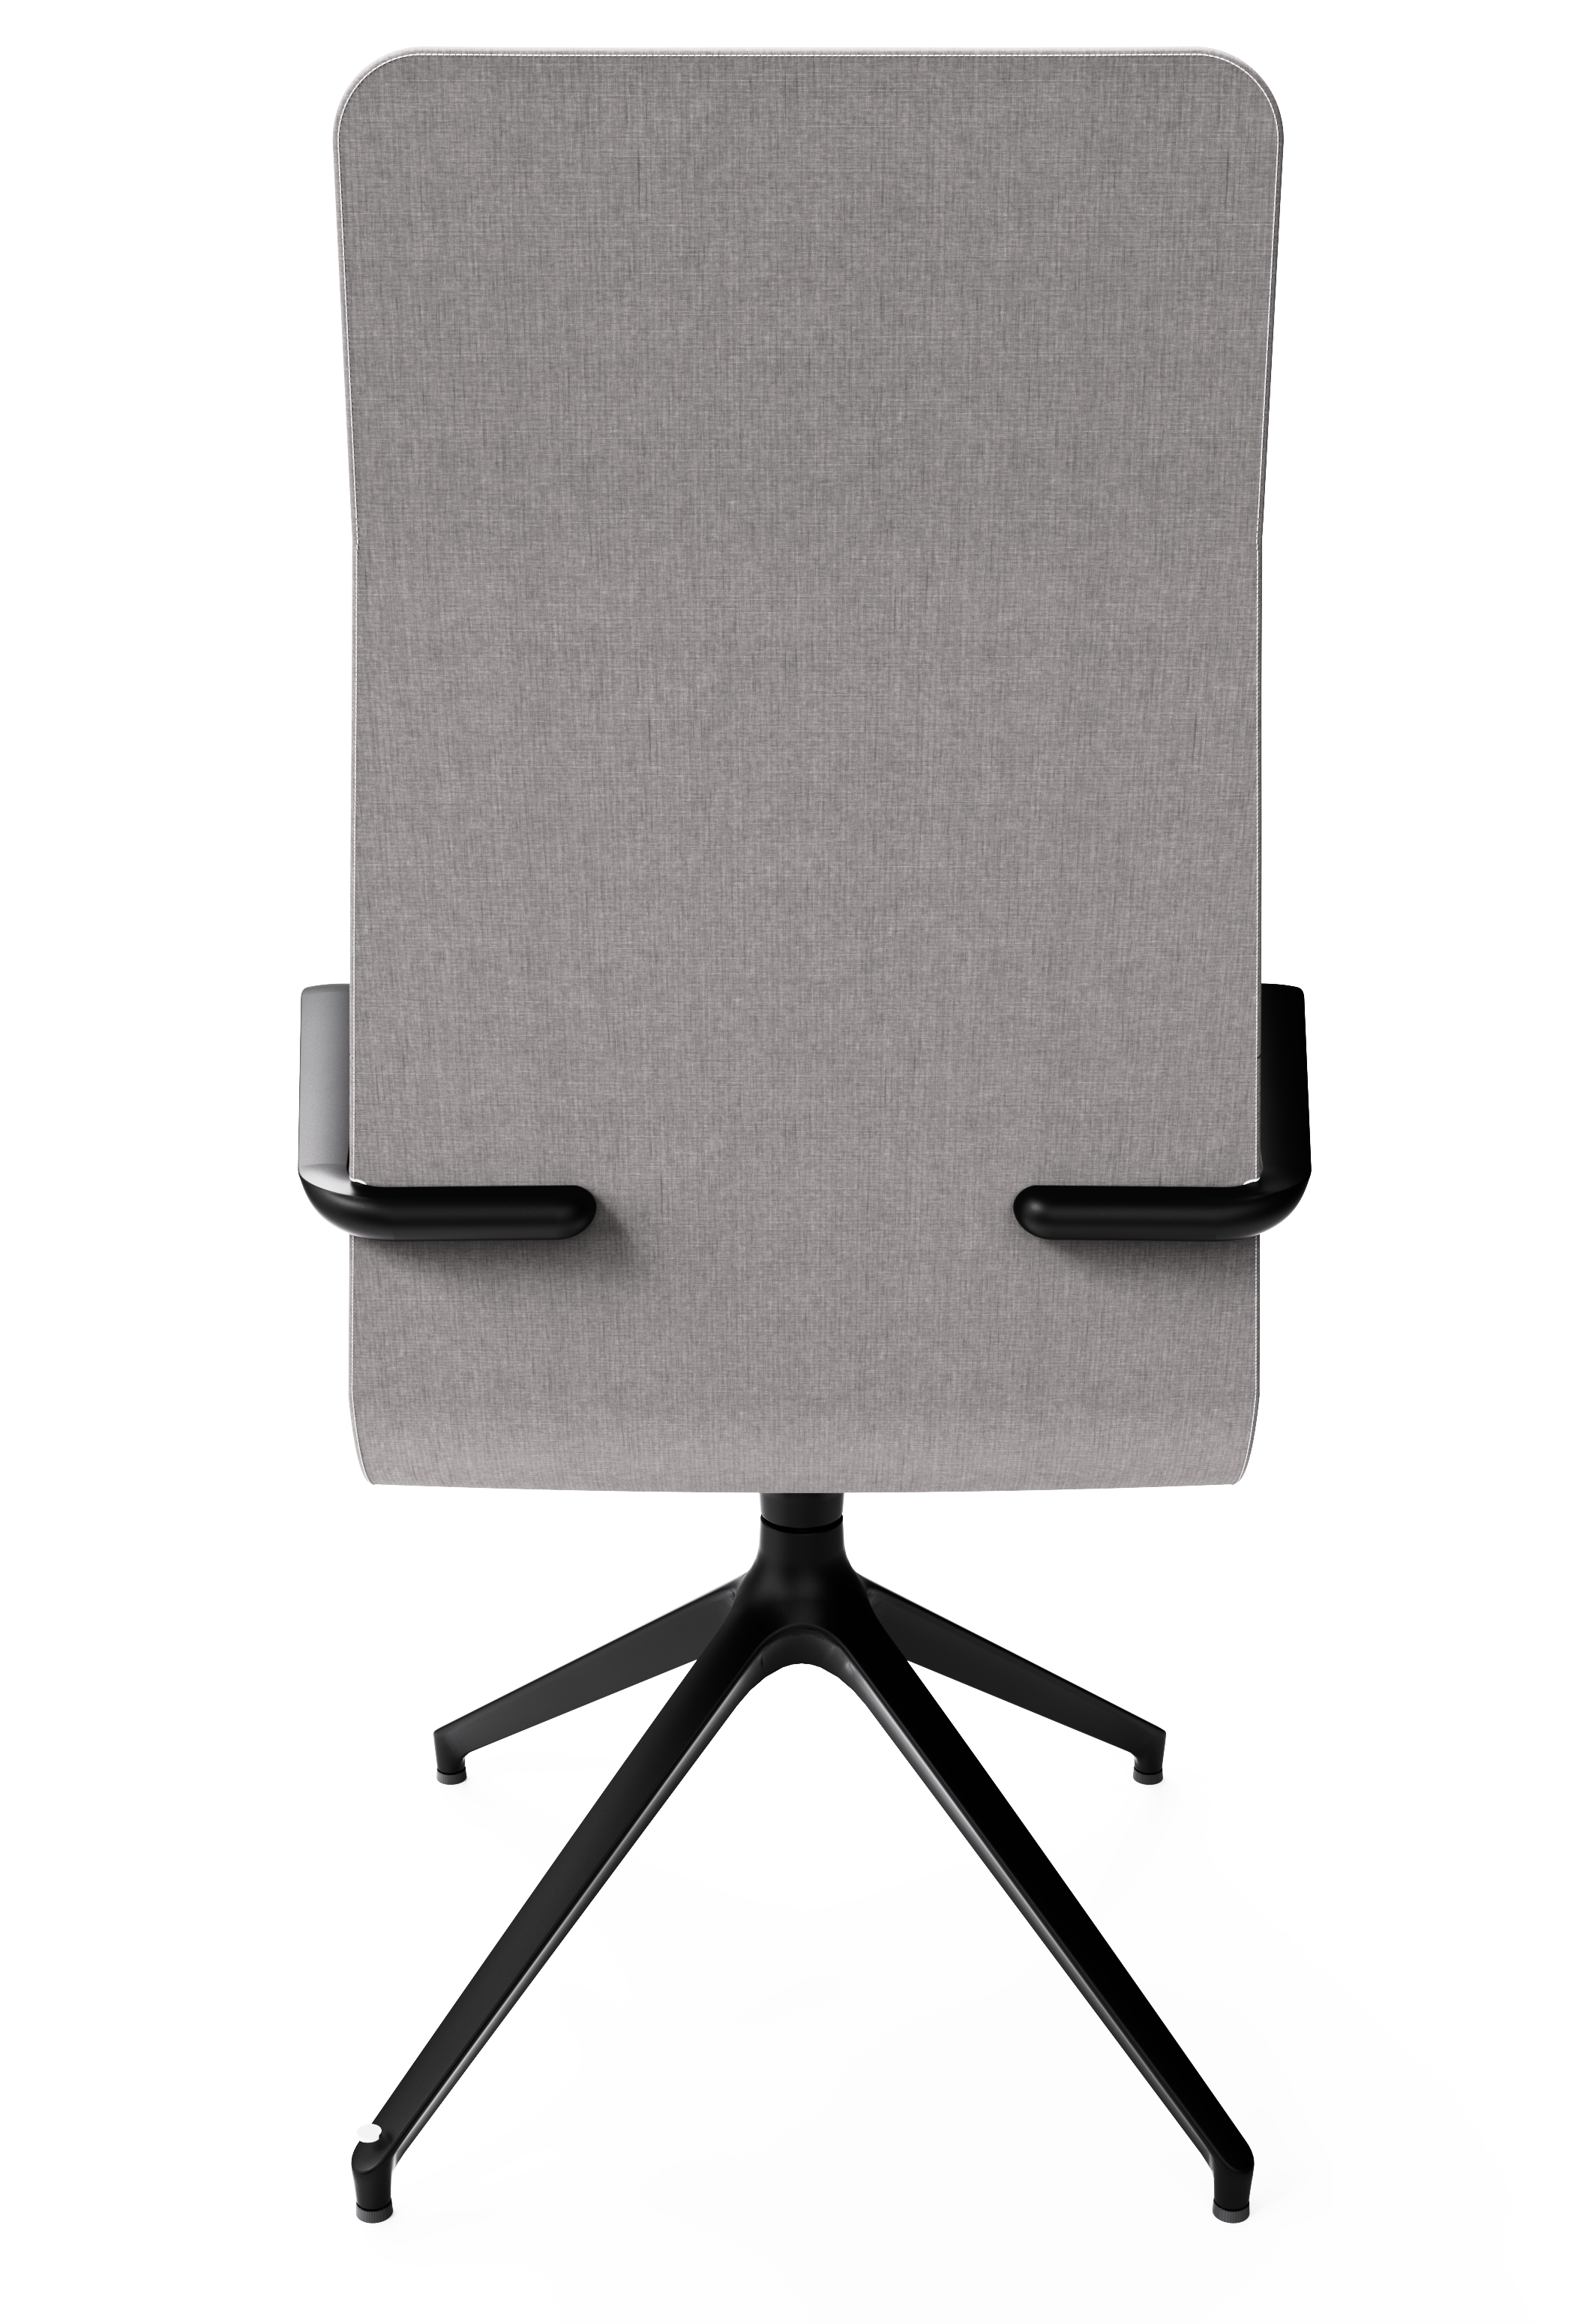 WS - Accord arms high 4 star base chair - chrome - remix 126 - back